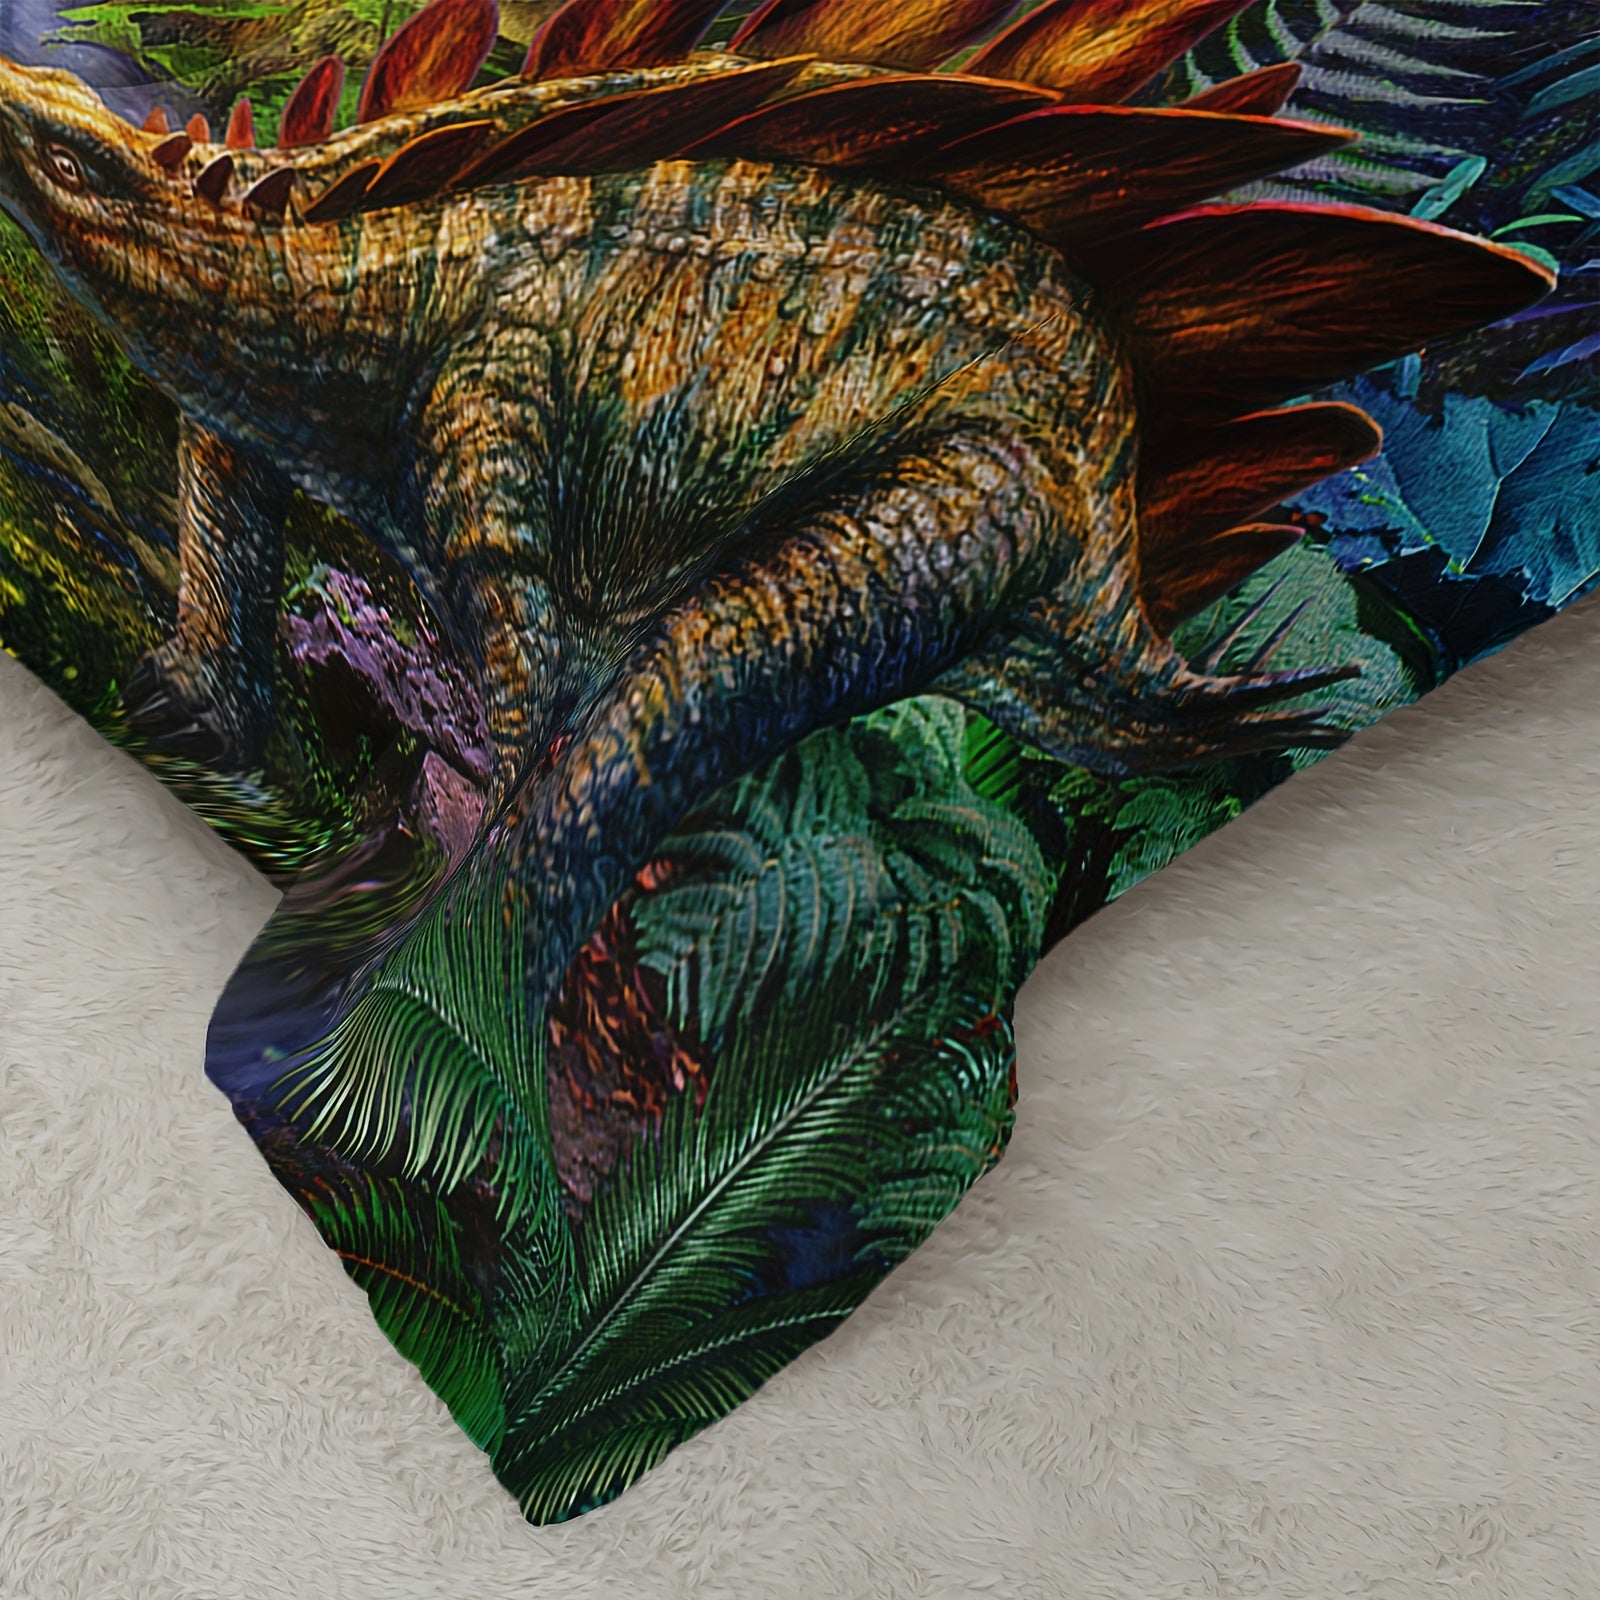 3pcs 3D Dinosaur Comforter Set (1*Comforter + 2*Pillowcase, Without Core), Jurassic Jungle Dinosaur Print All Season Bedding Set, Soft Comfortable And Skin-friendly Comforter For Bedroom, Guest Room